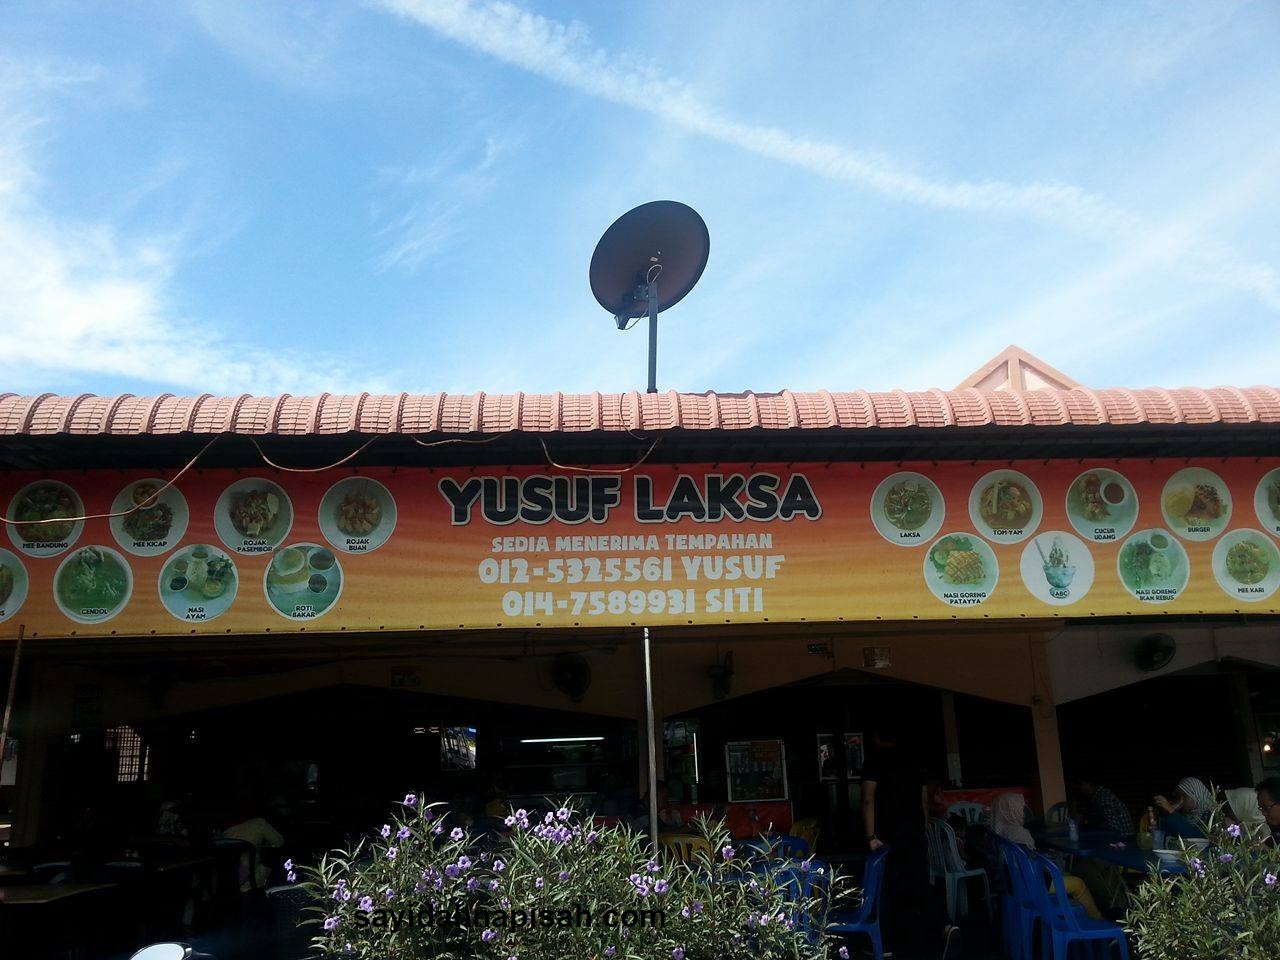 Yusuf Laksa, Kuala Kangsar